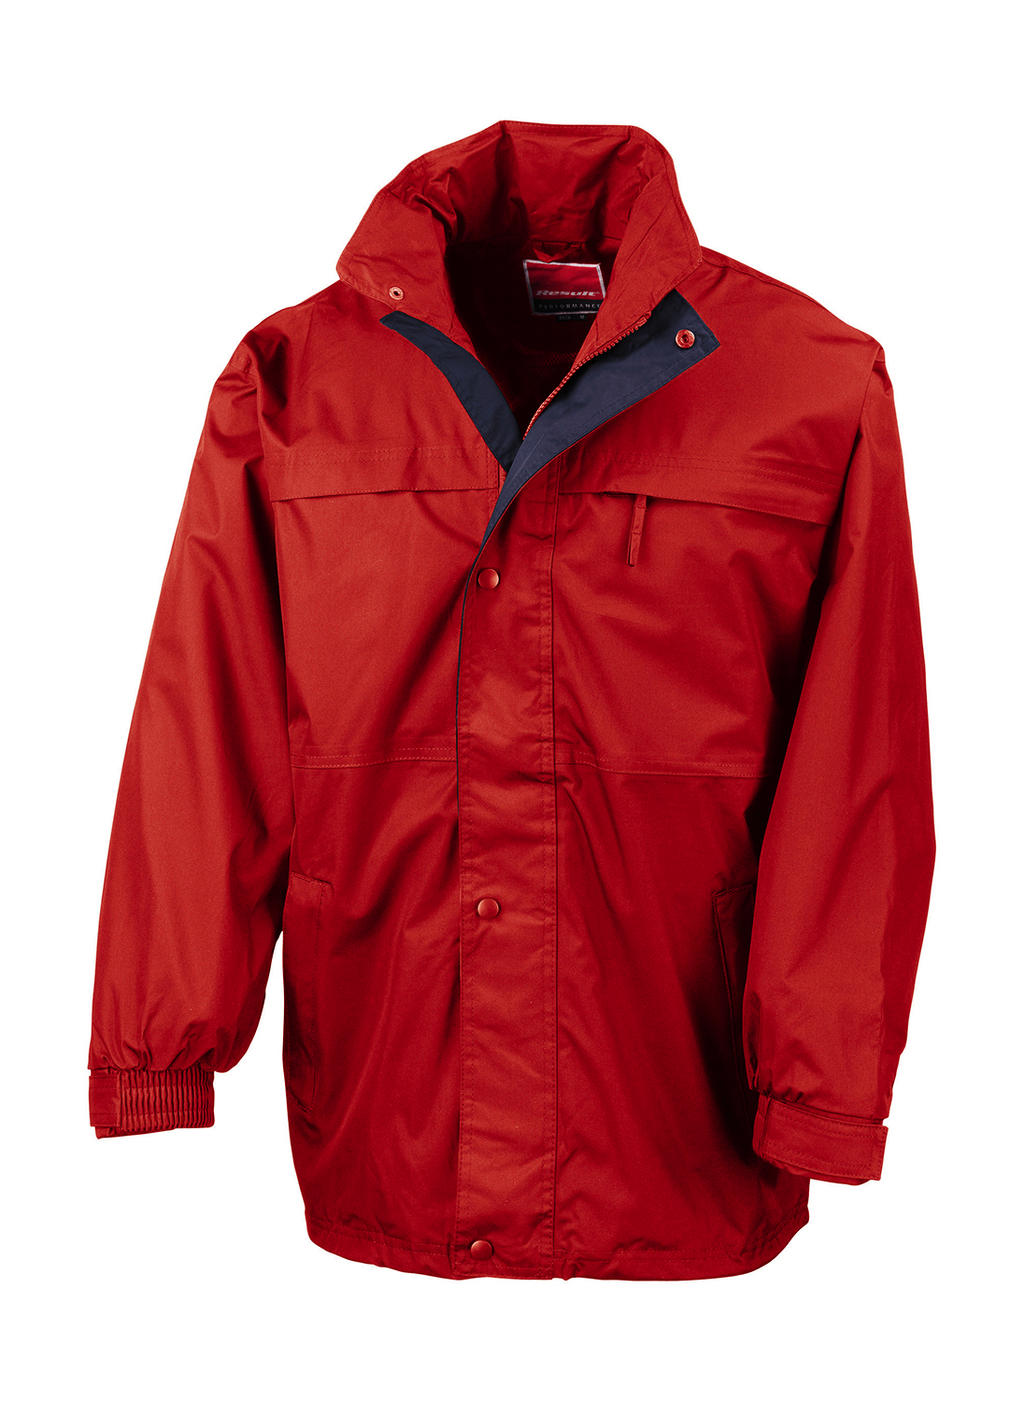  Mid-Season Jacket in Farbe Red/Navy